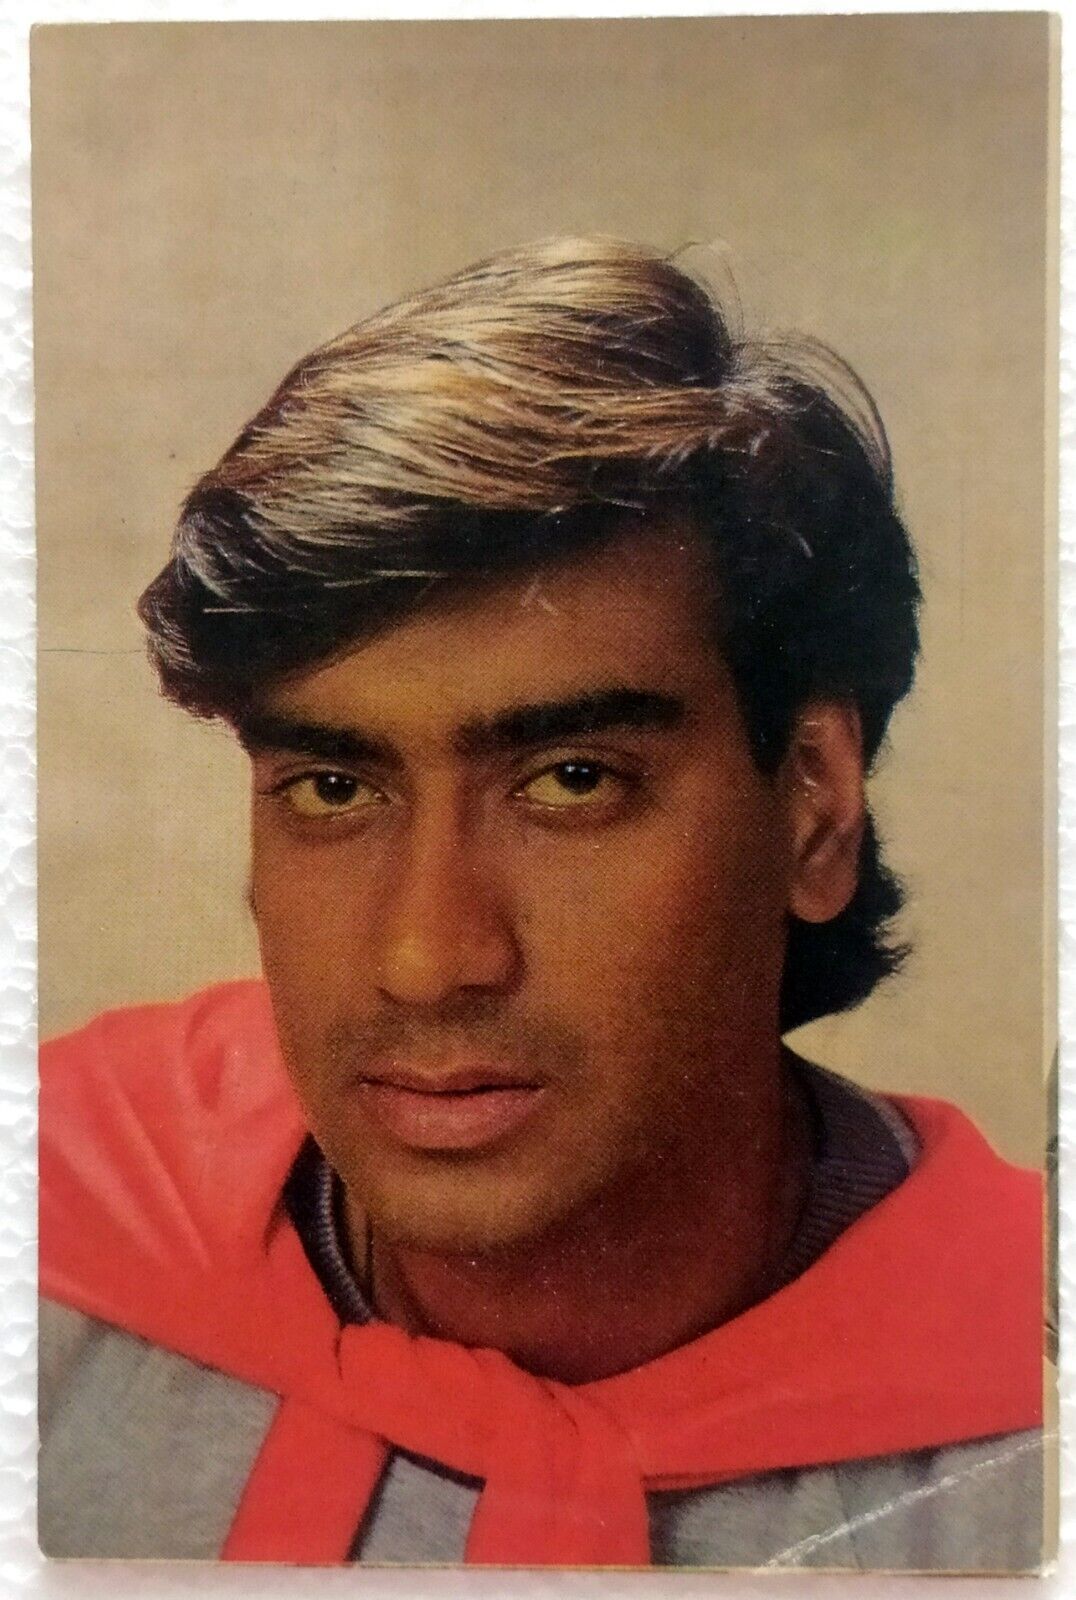 Primary image for Bollywood Super Star Actor Ajay Devgan Rare old Original Post card Postcard